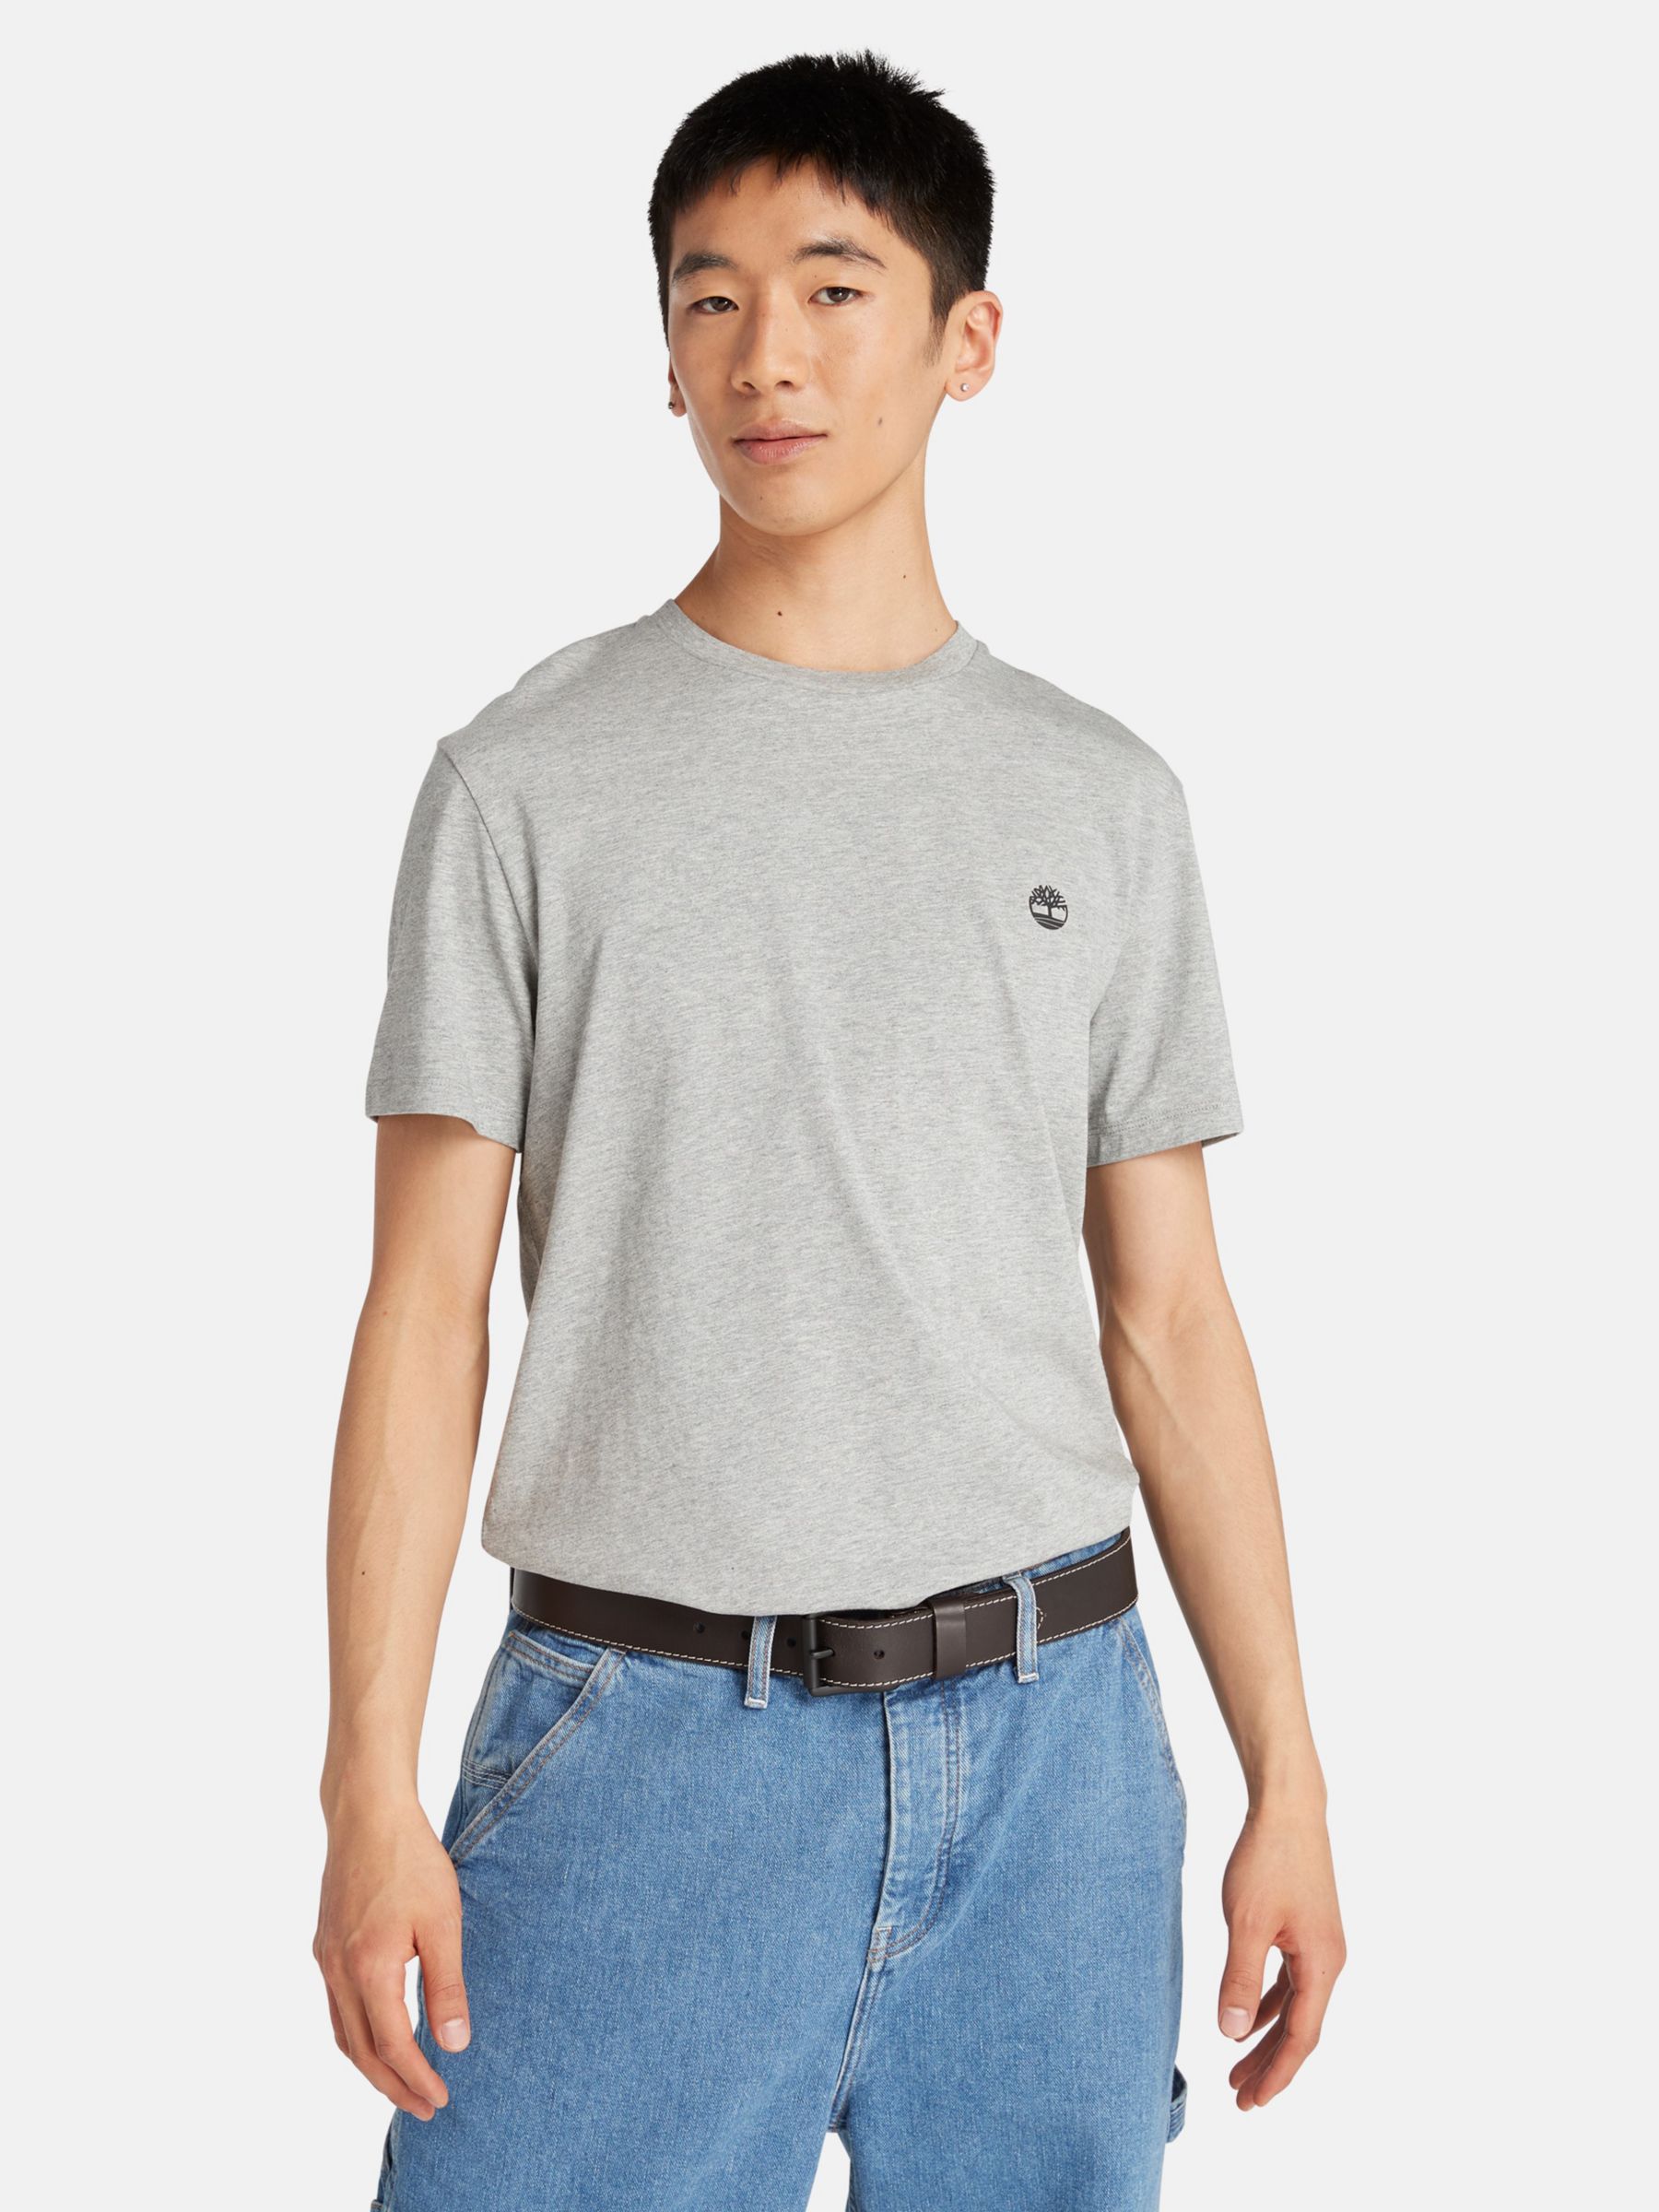 Timberland Slim Fit Basic Jersey T-Shirt, Pack of 3, Multi, XL